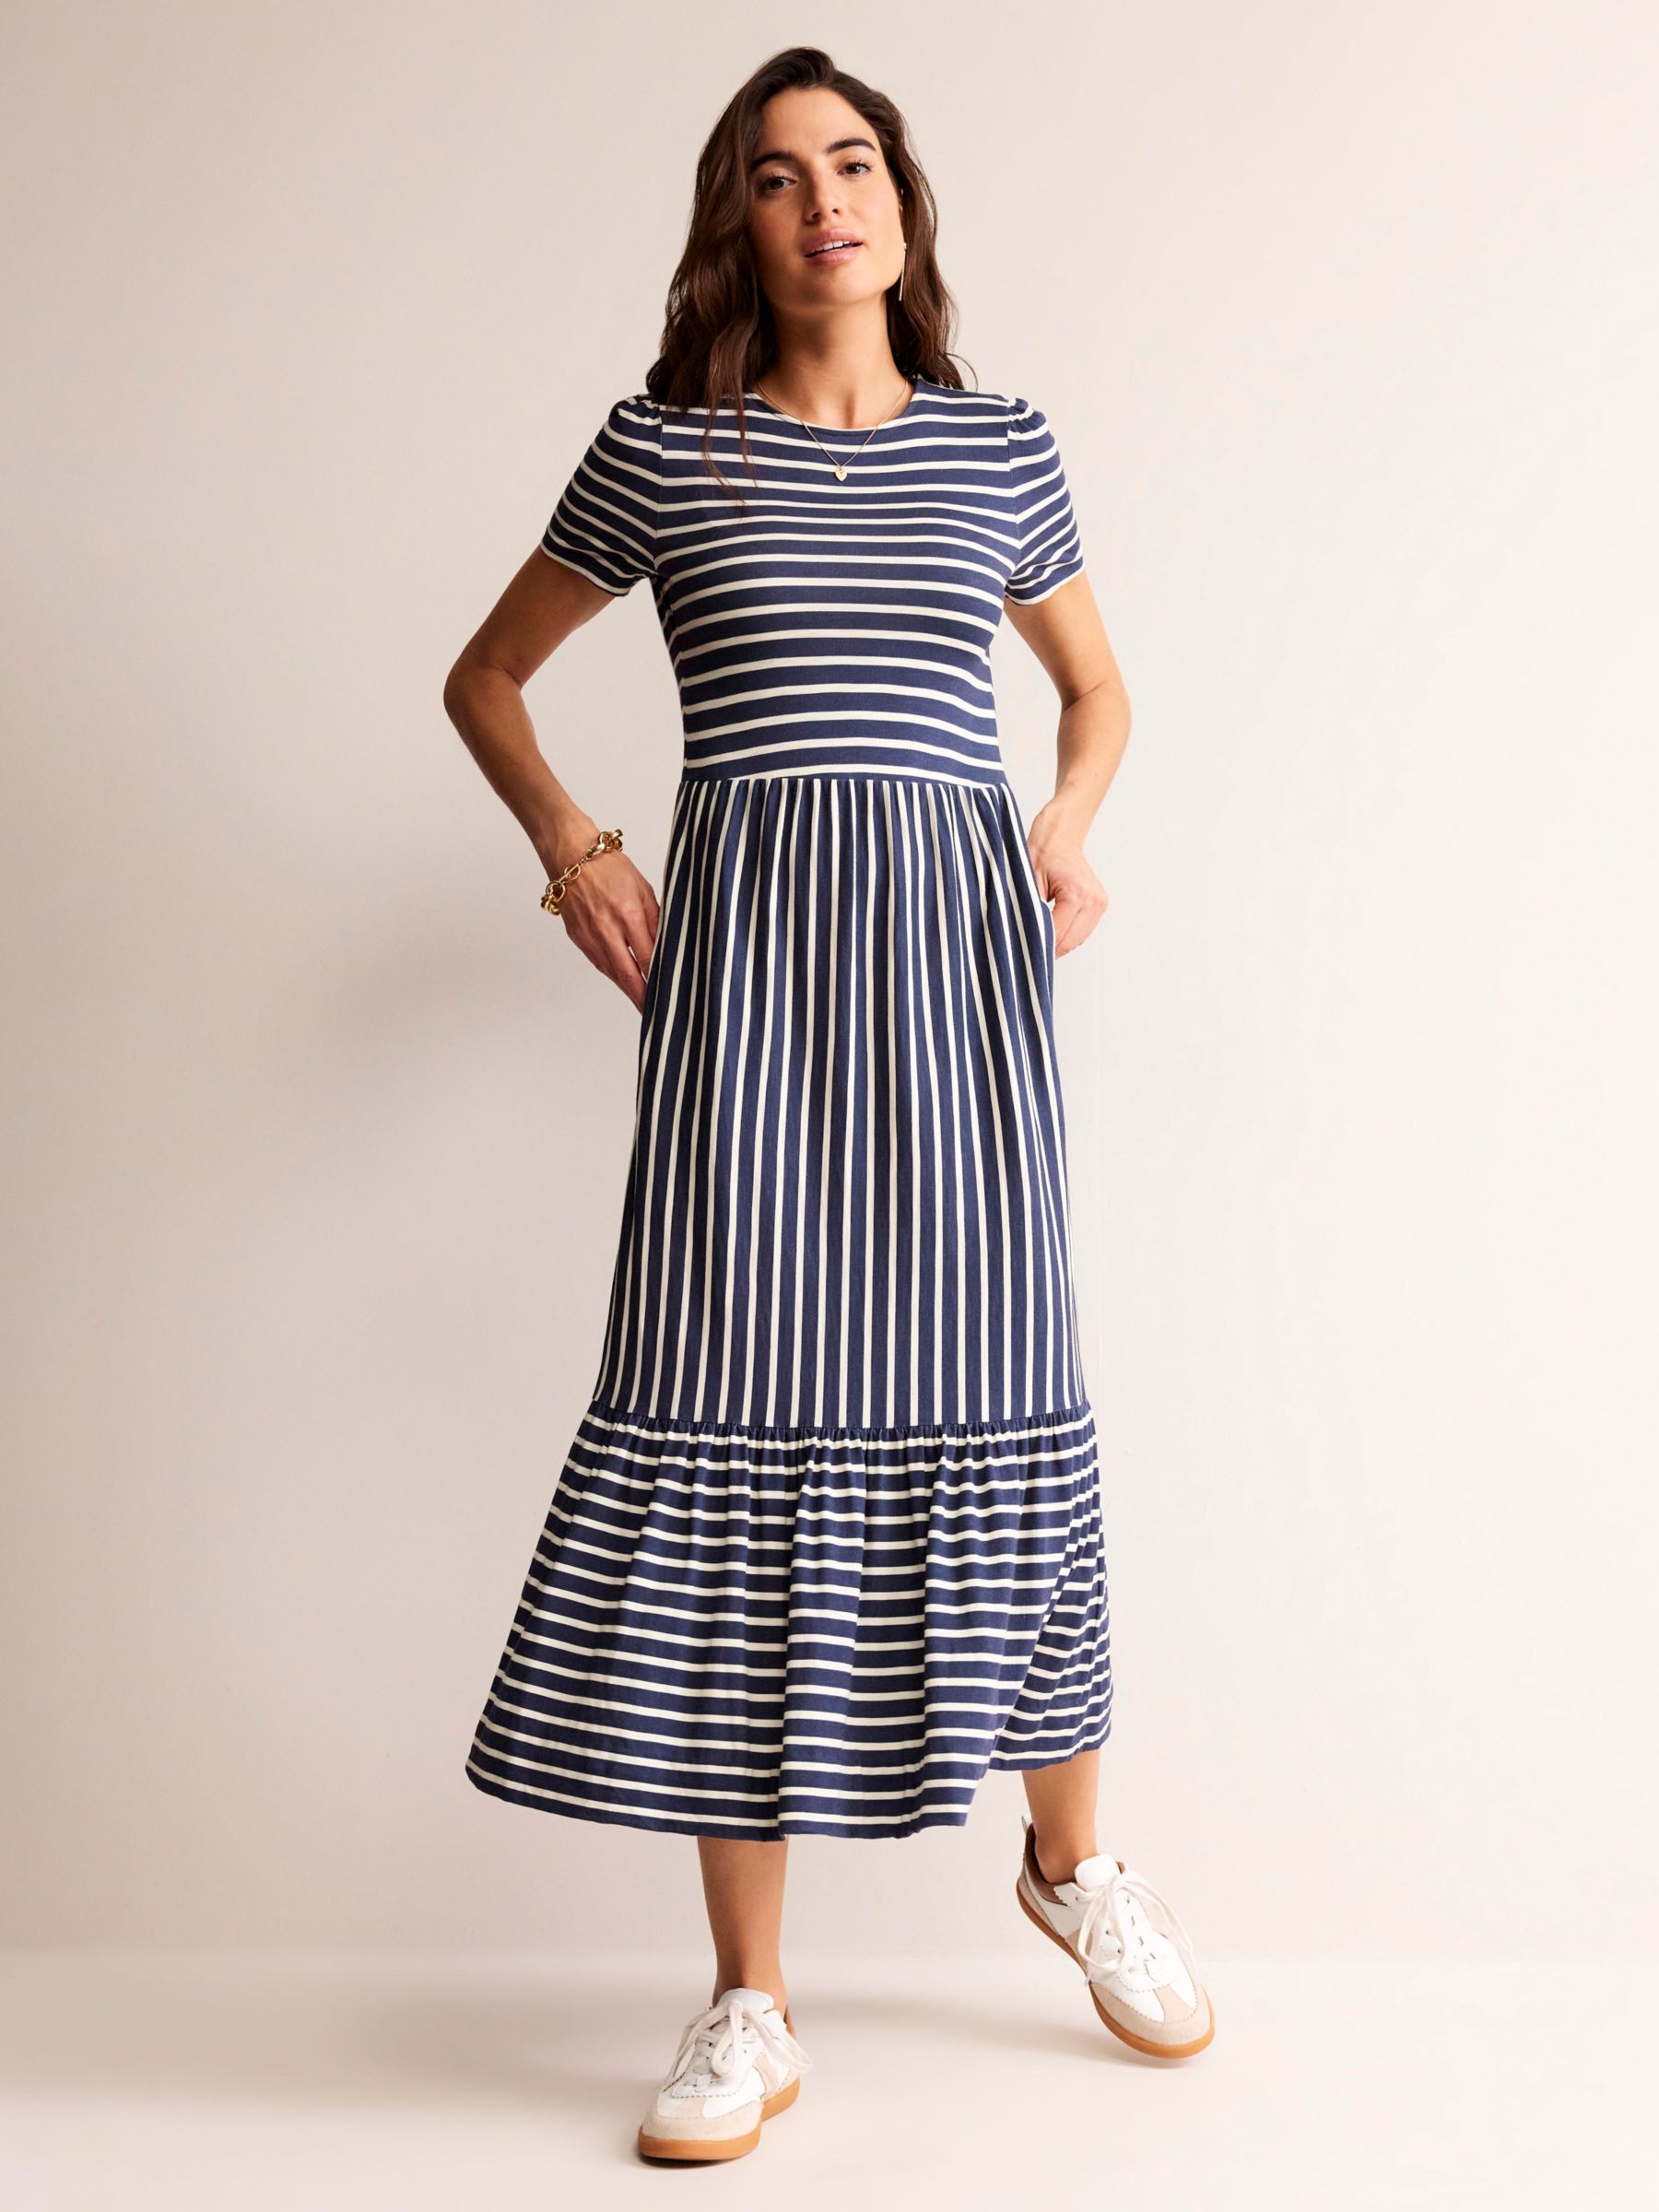 Boden Emma Stripe Tiered Midi Dress, Navy/Ivory at John Lewis & Partners